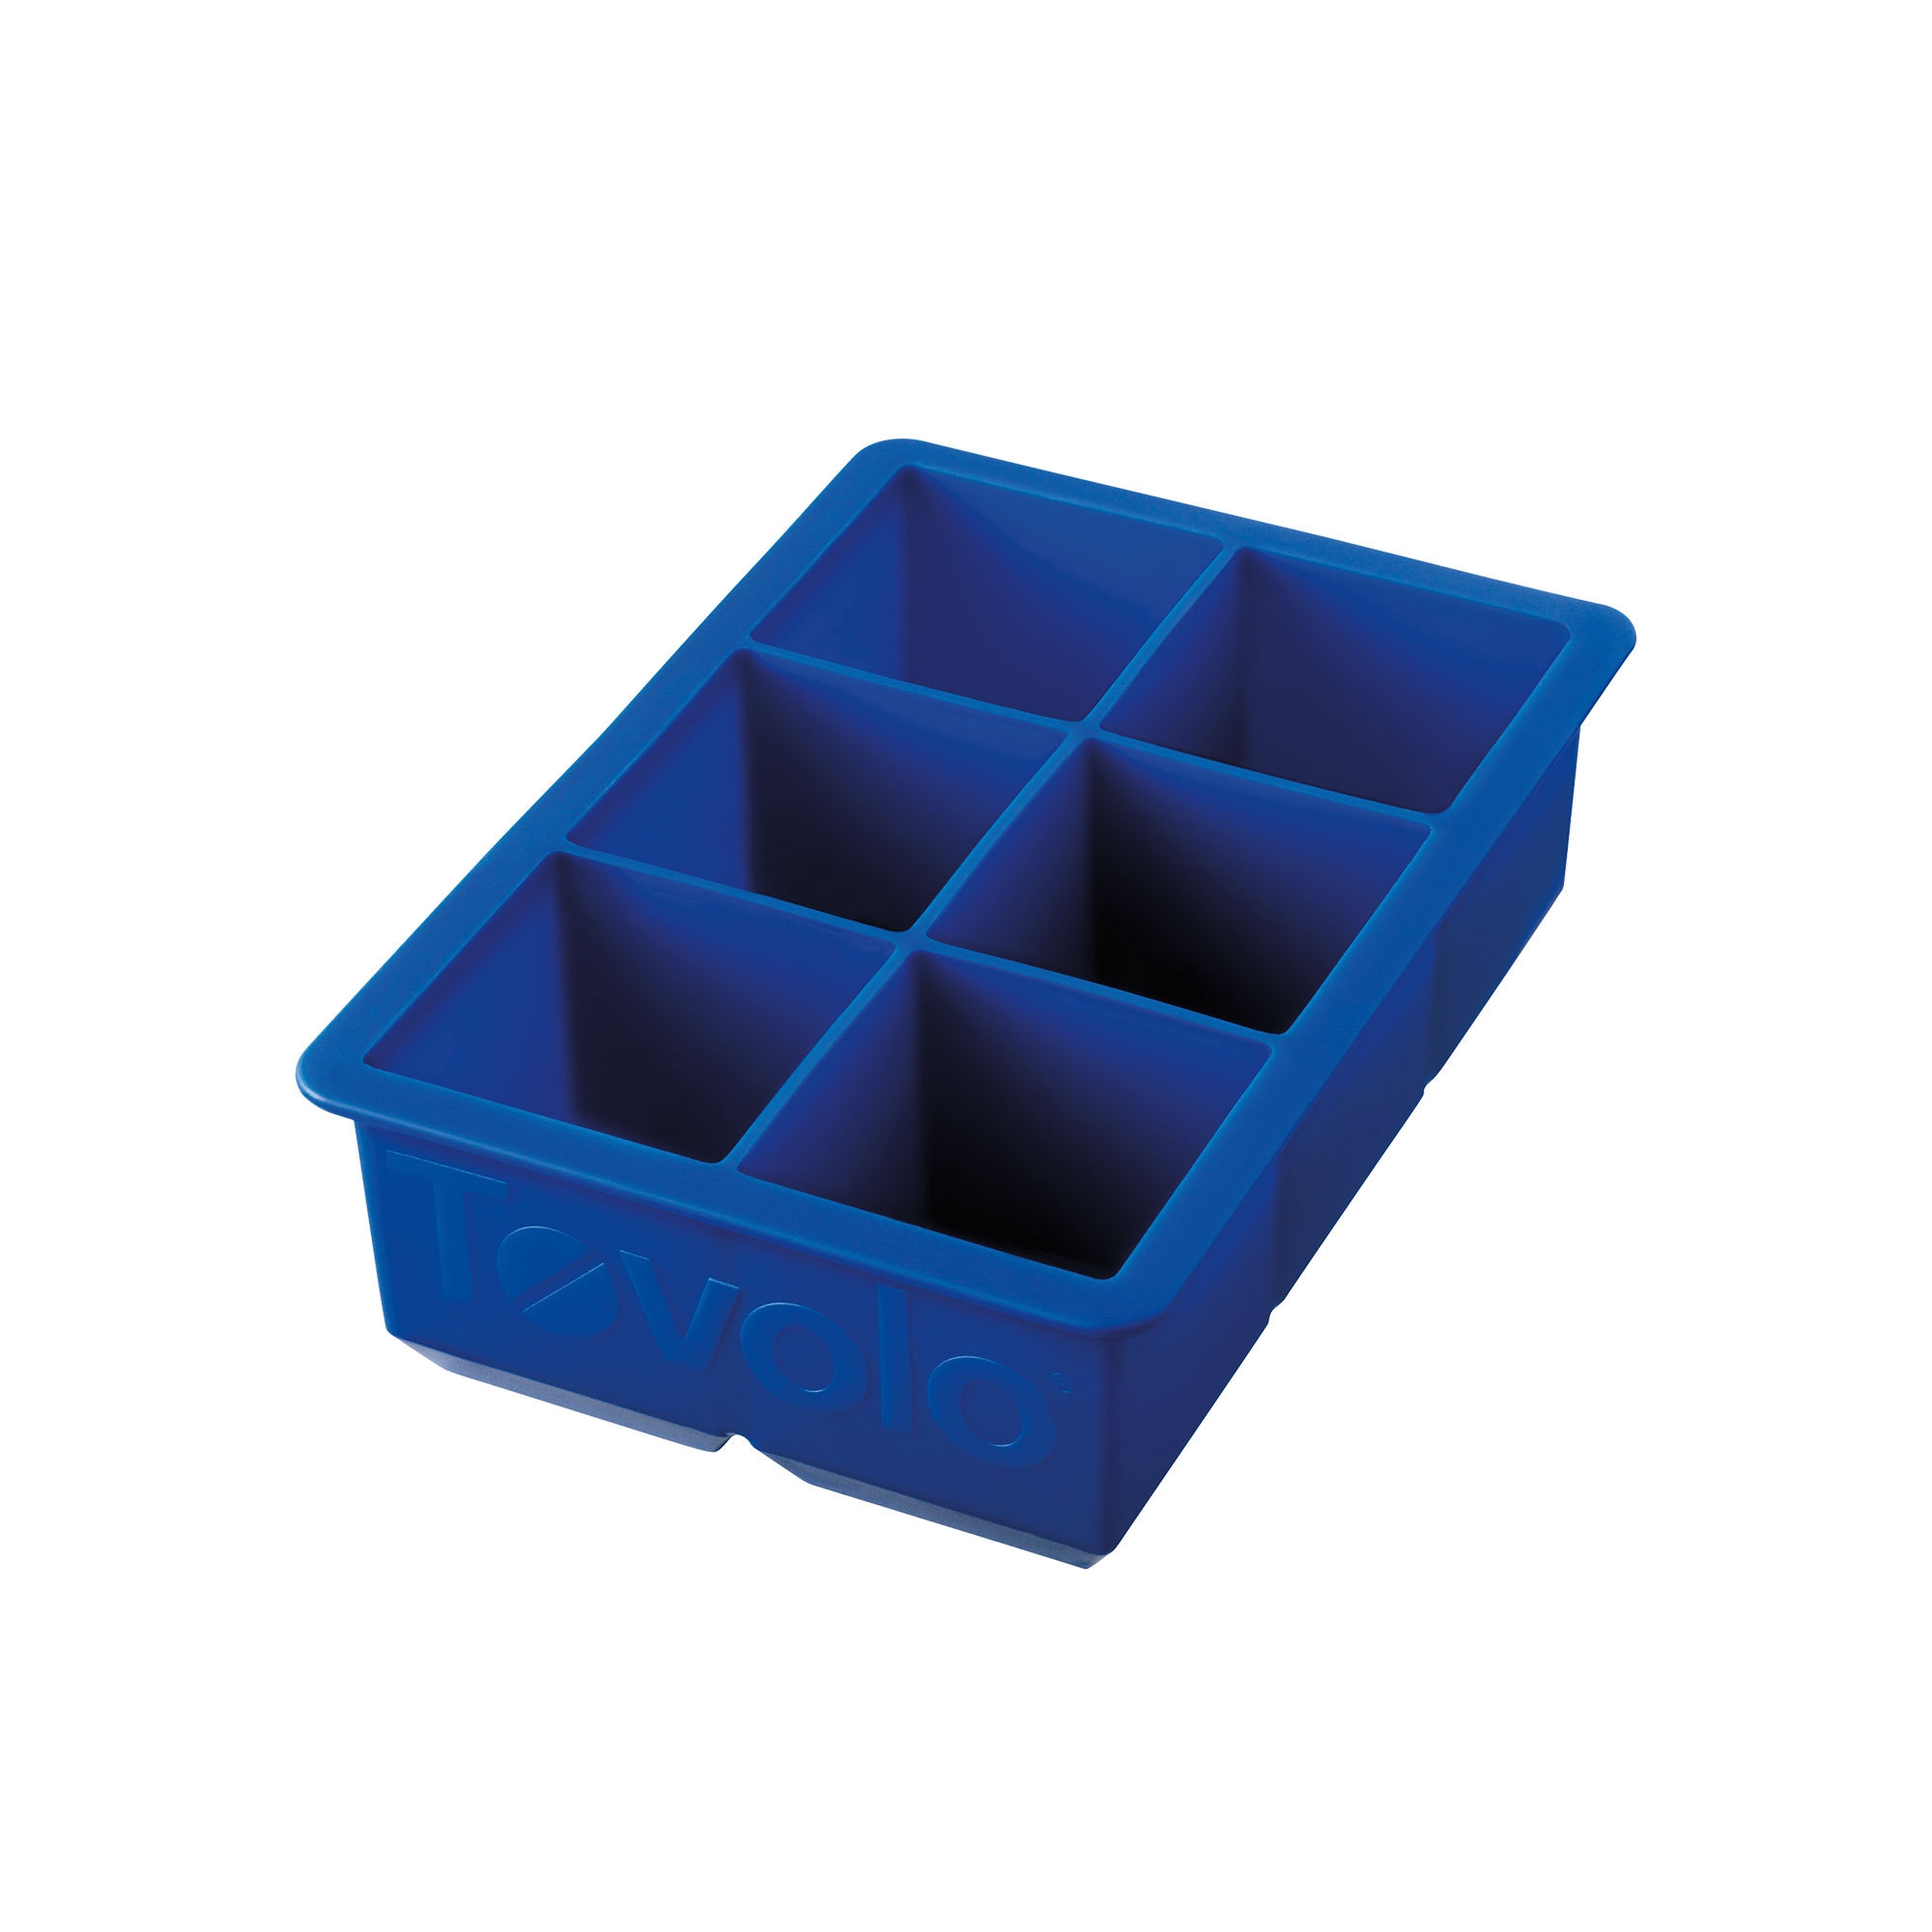 Tovolo King 6 Cube Ice Tray Blue Image 1